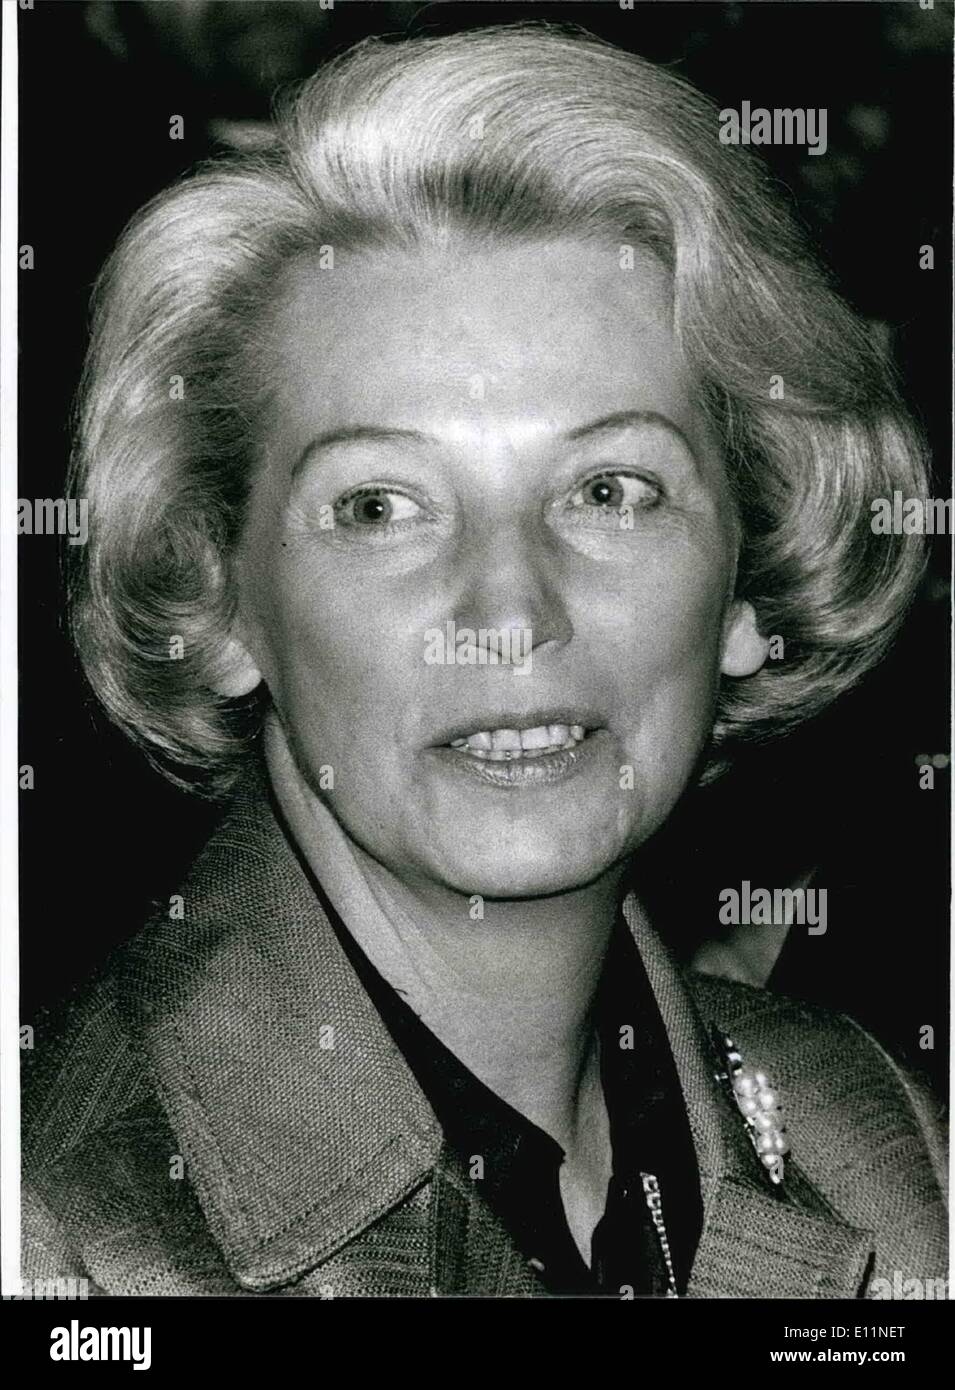 Lug. 07, 1979 - 7.10.1979: 60 compleanno di Annemarie Renger: Annemarie Renger (ANNEMARIE RENGER -immagine), il vice presidente di Foto Stock